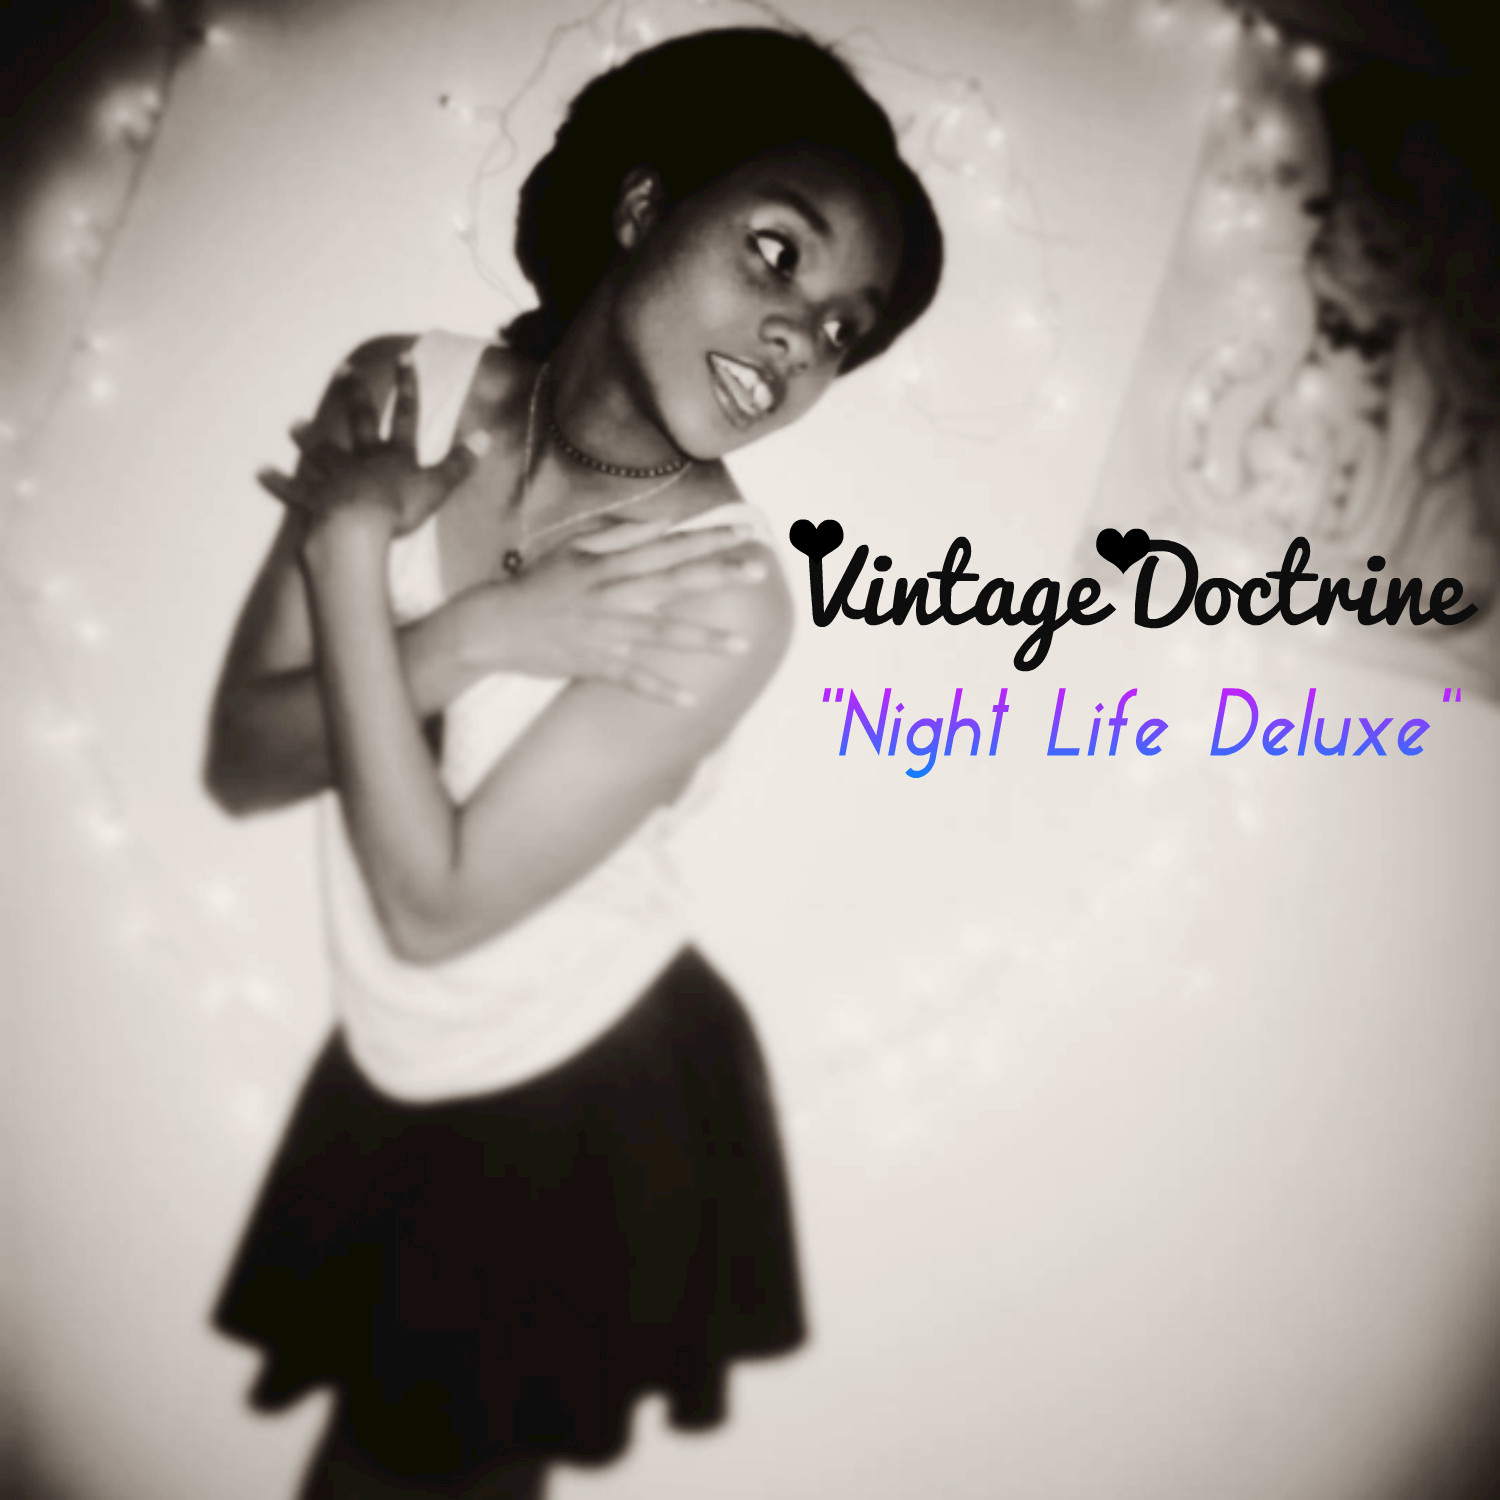 Night Life Deluxe